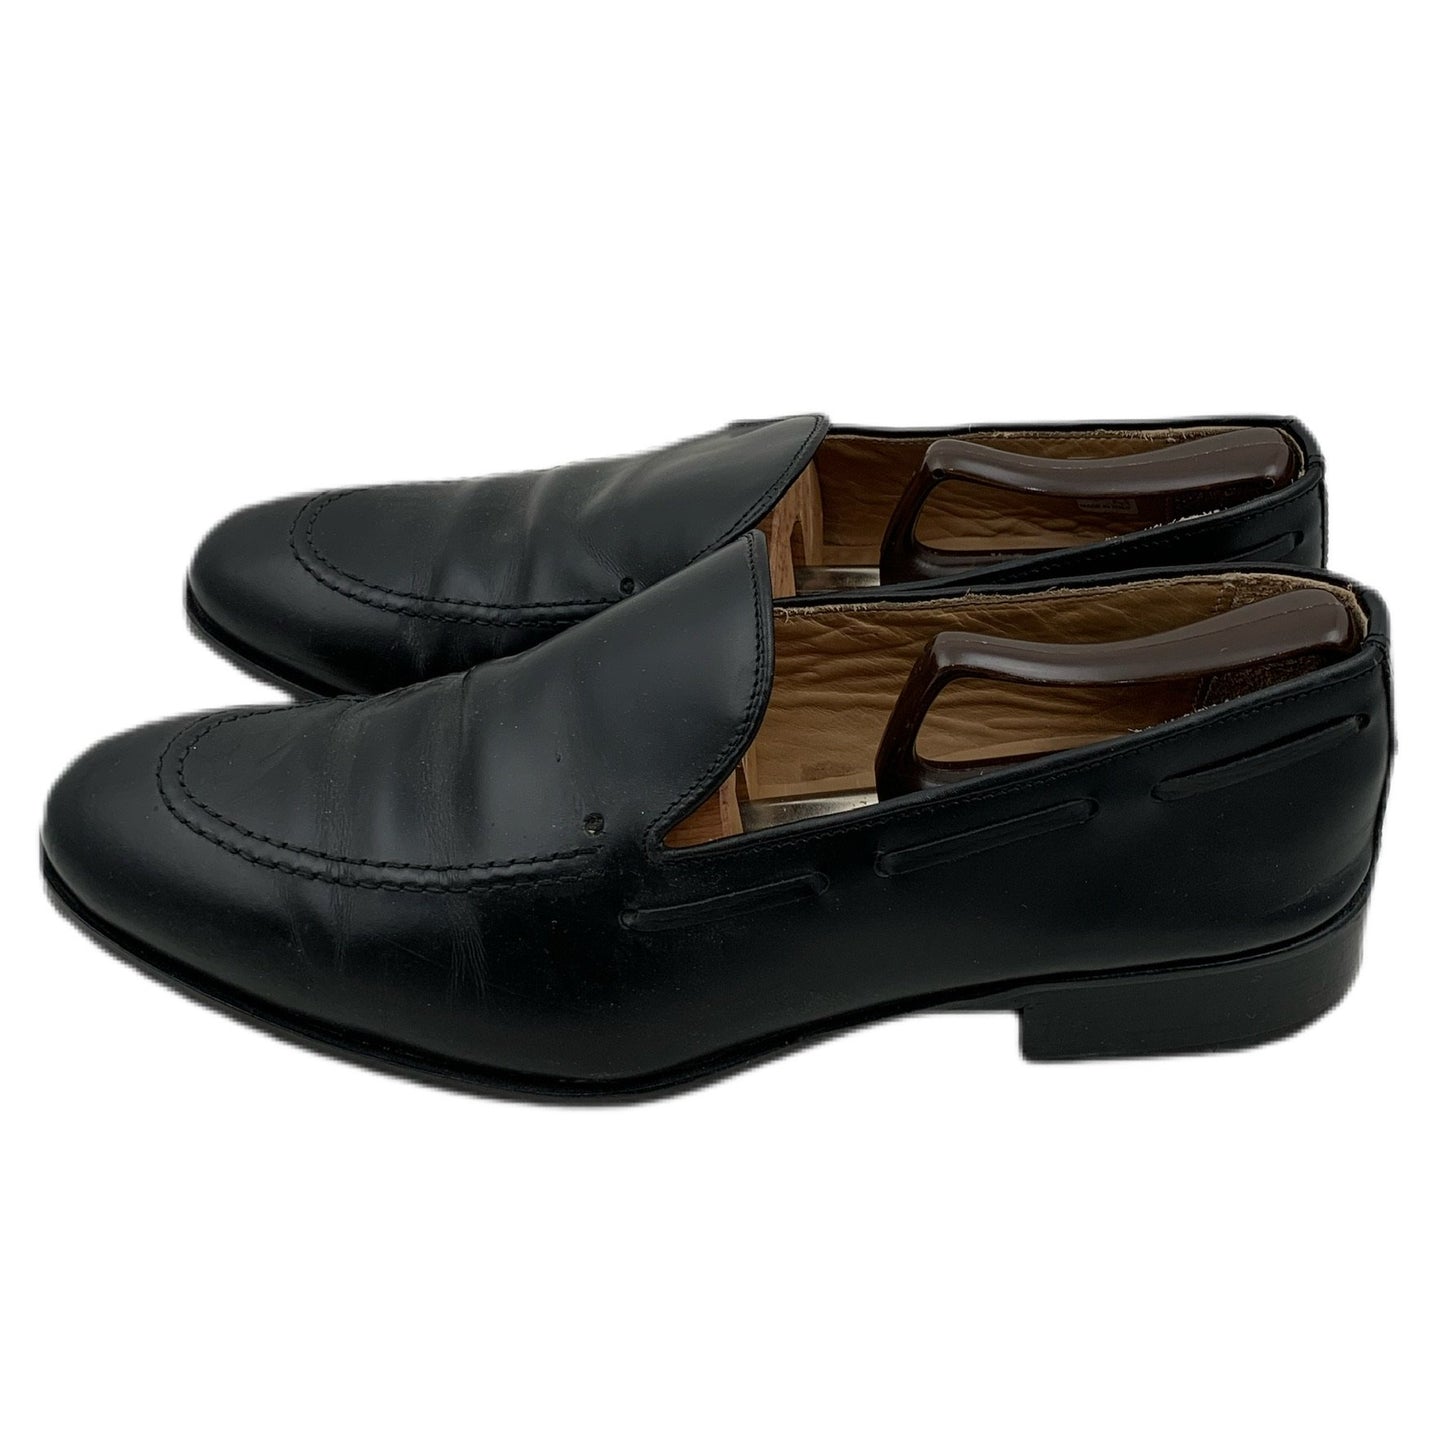 Schuhe Saxone of Scotland Mokassinschuhe aus Leder 9,5 UK